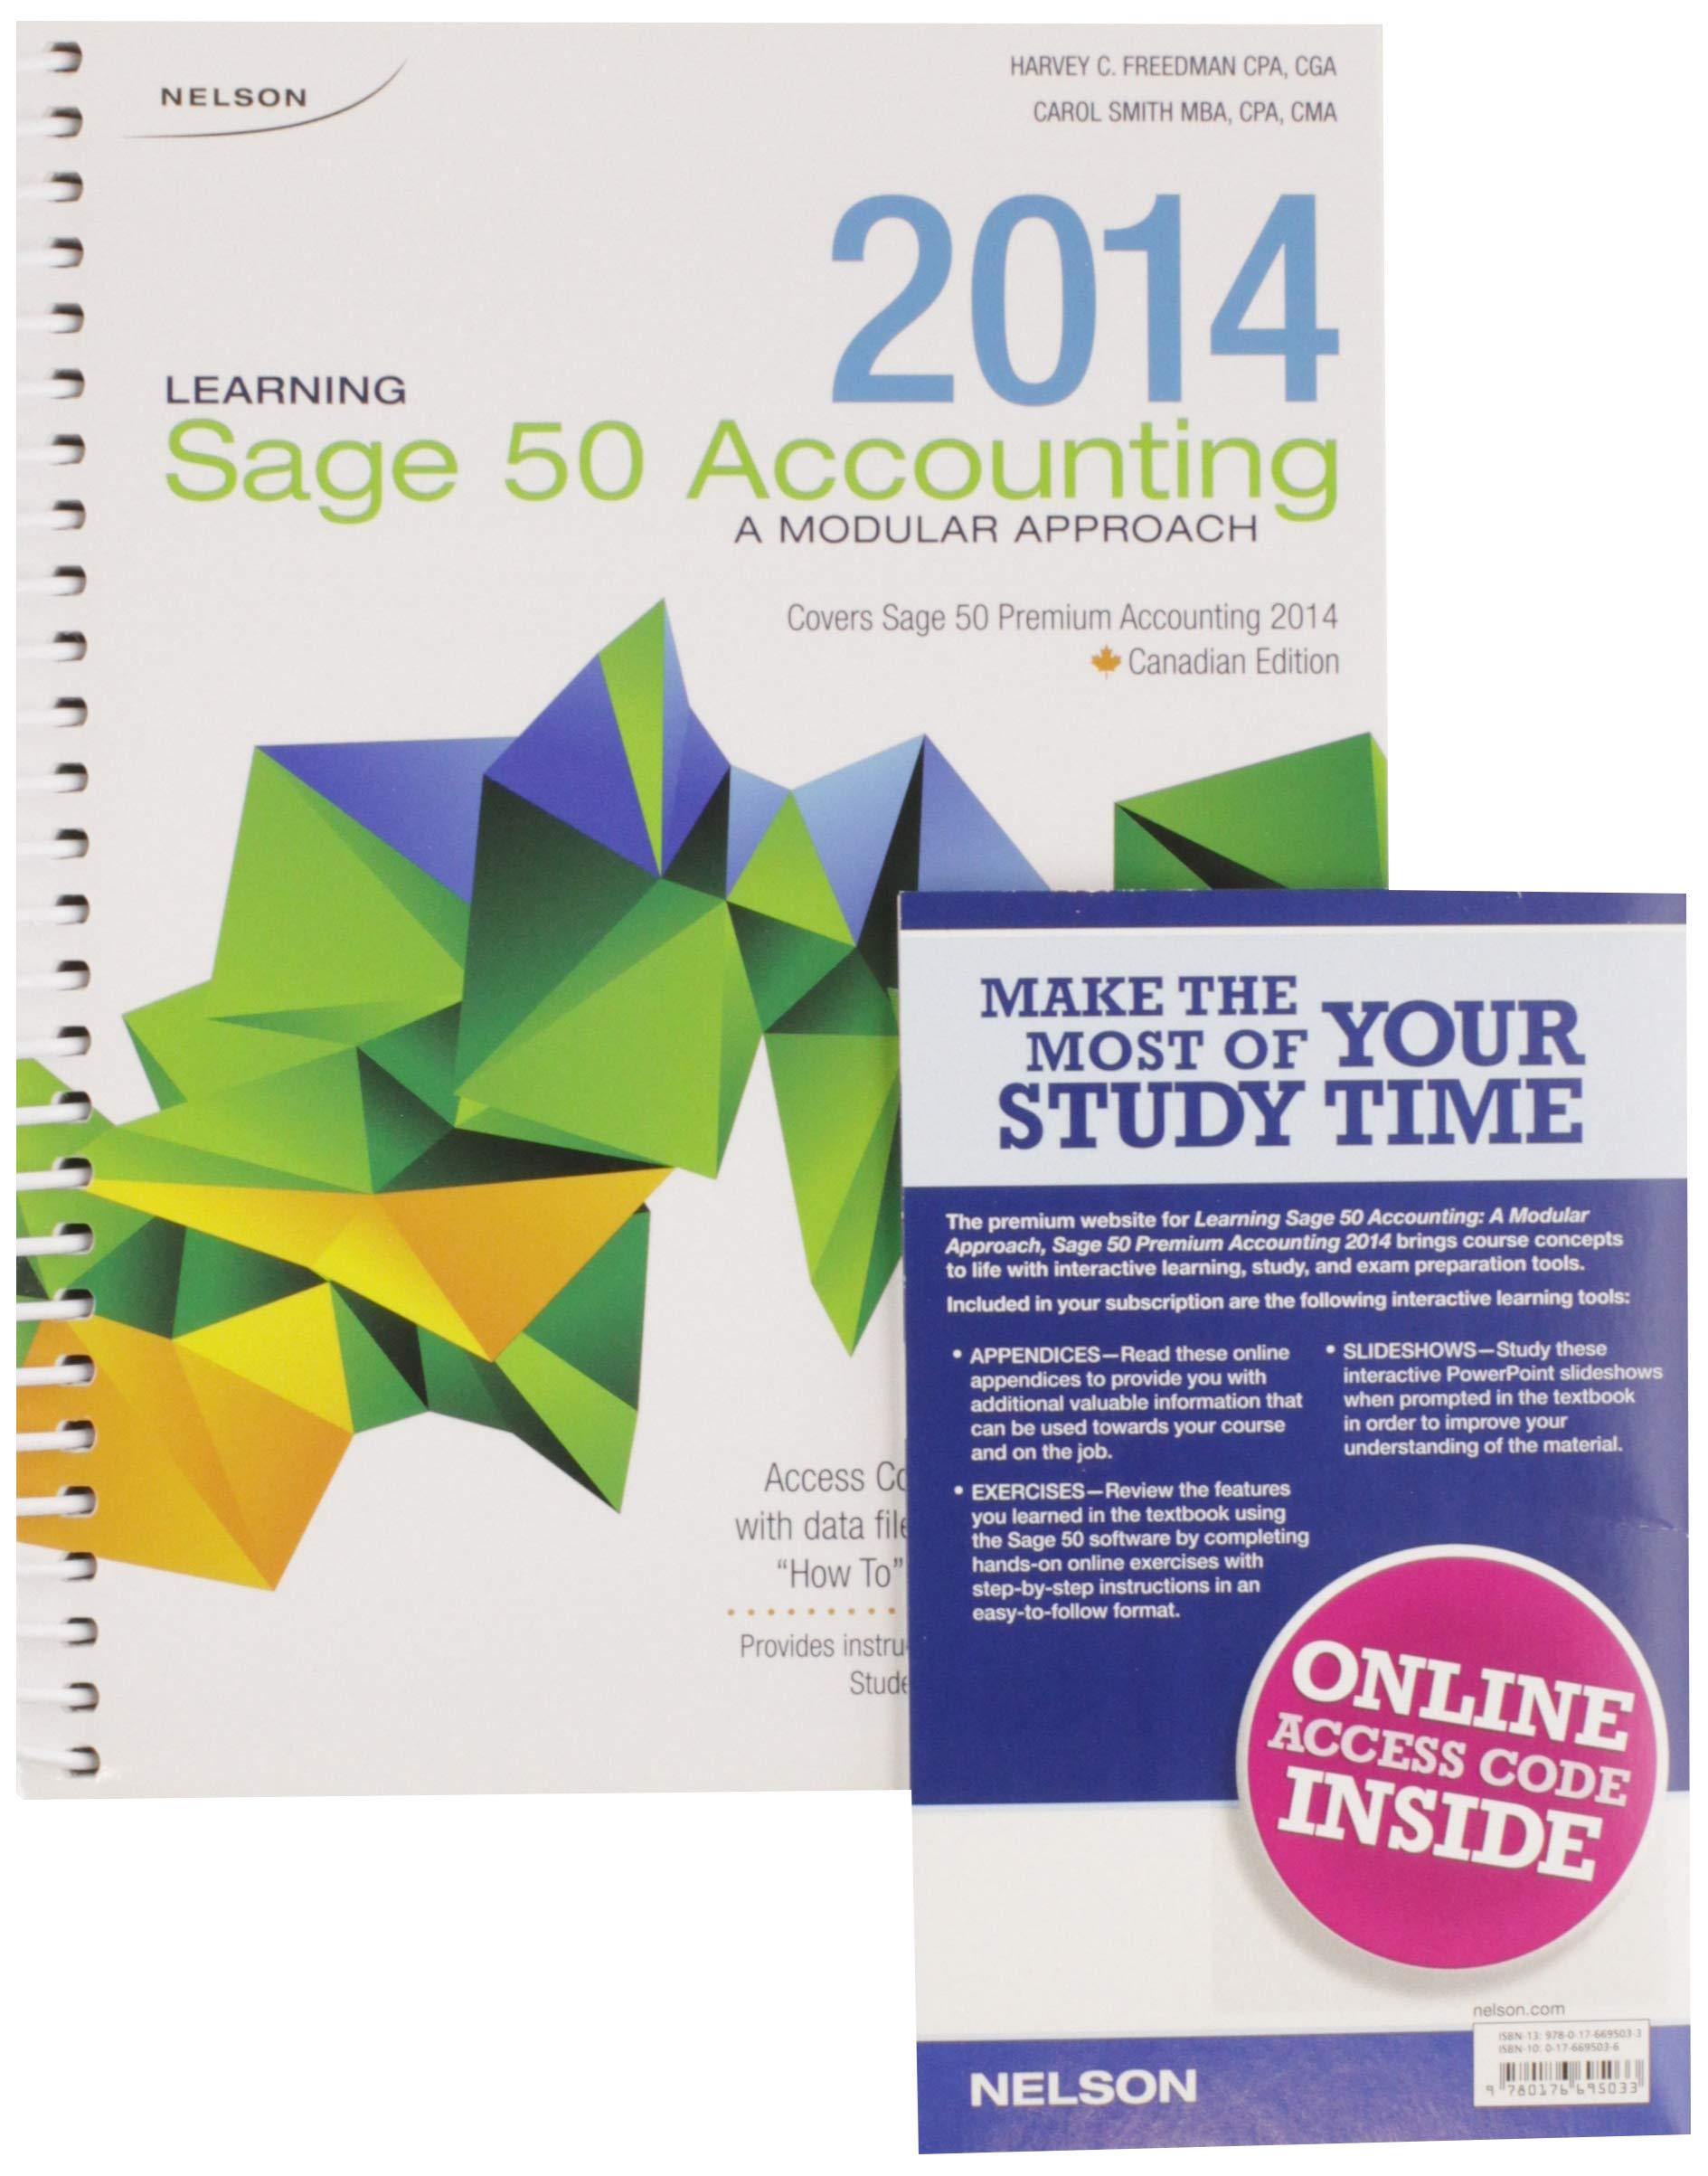 learning sage 50 accounting 2014 a modular approach 15th edition harvey freedman, carol smith smith